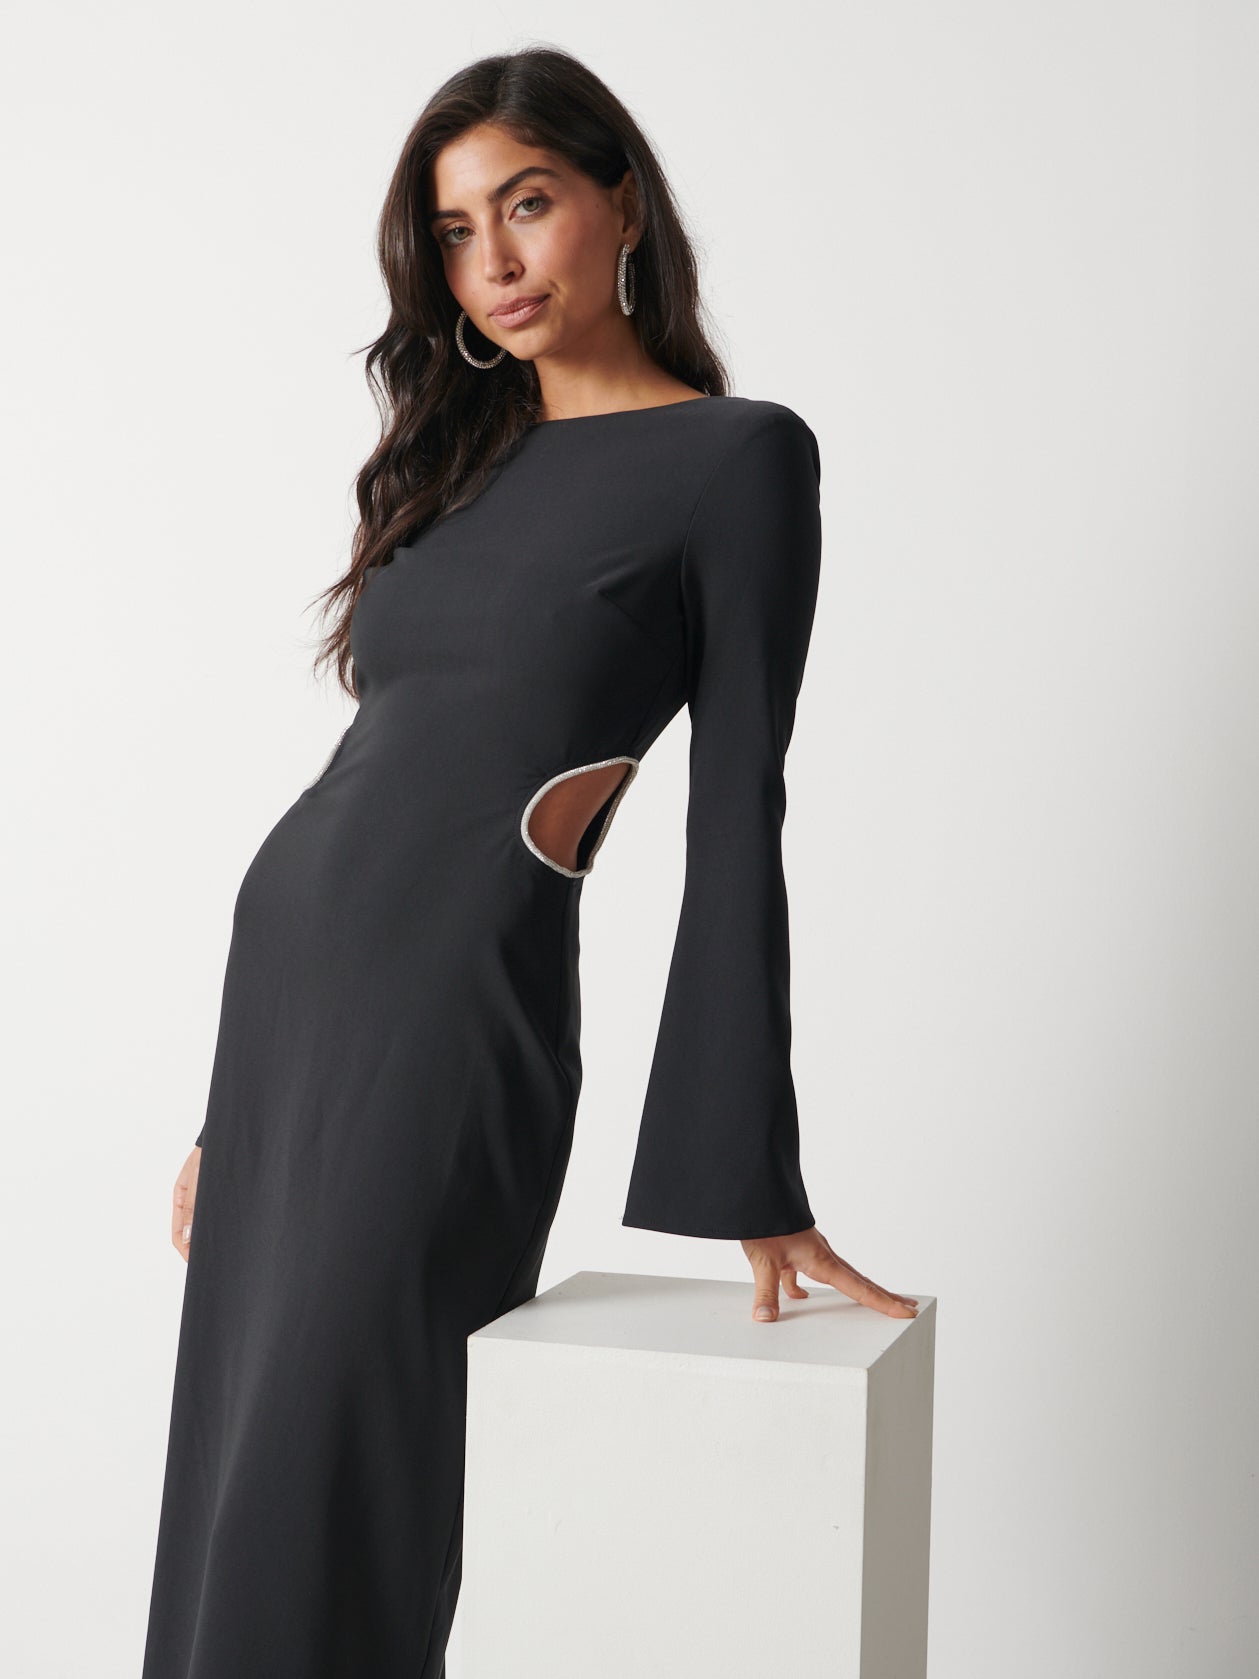 Reina Embellished Cut Out Midaxi Dress - Black